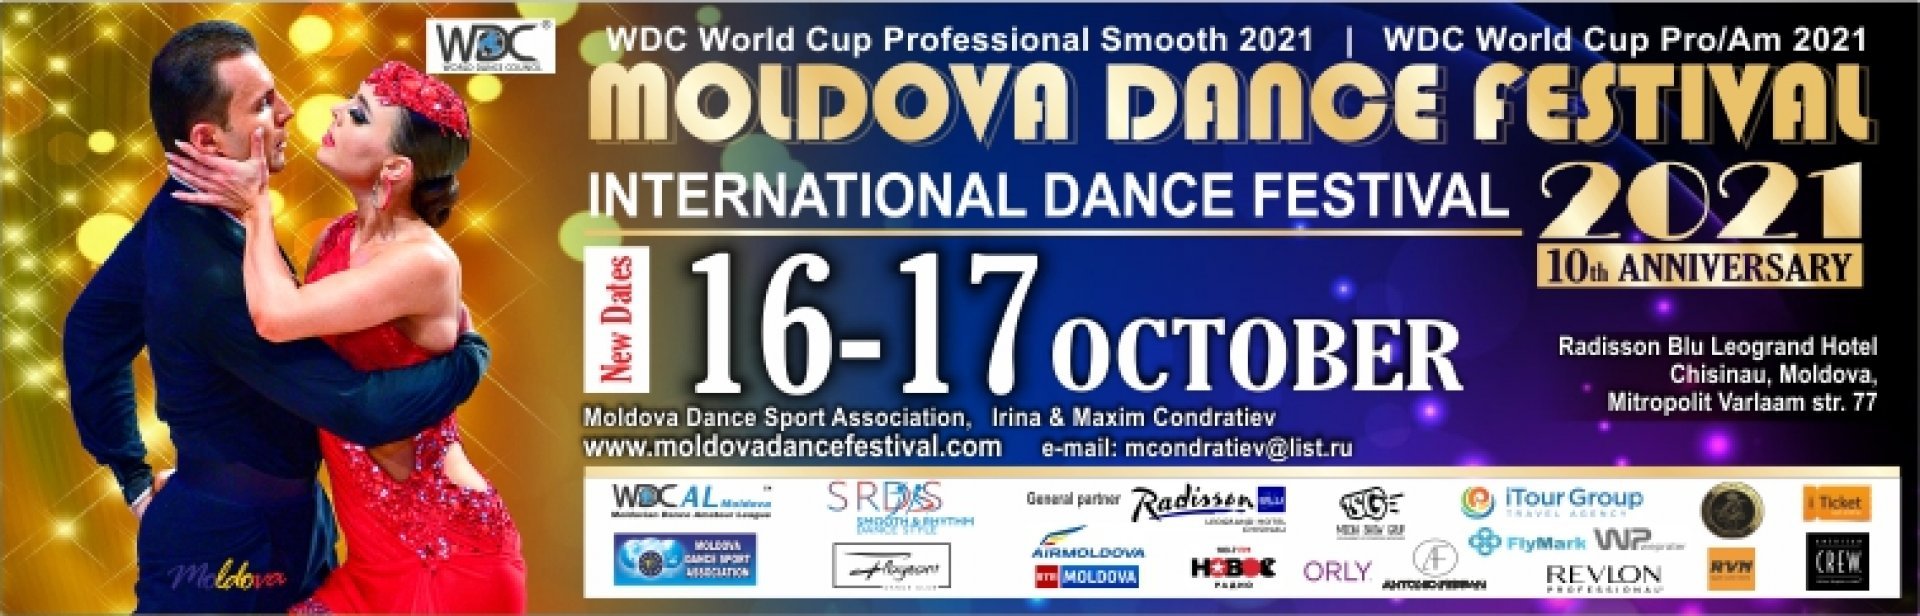 16 Octombrie 16:30-18:30 - Moldova Dance Festival 2021